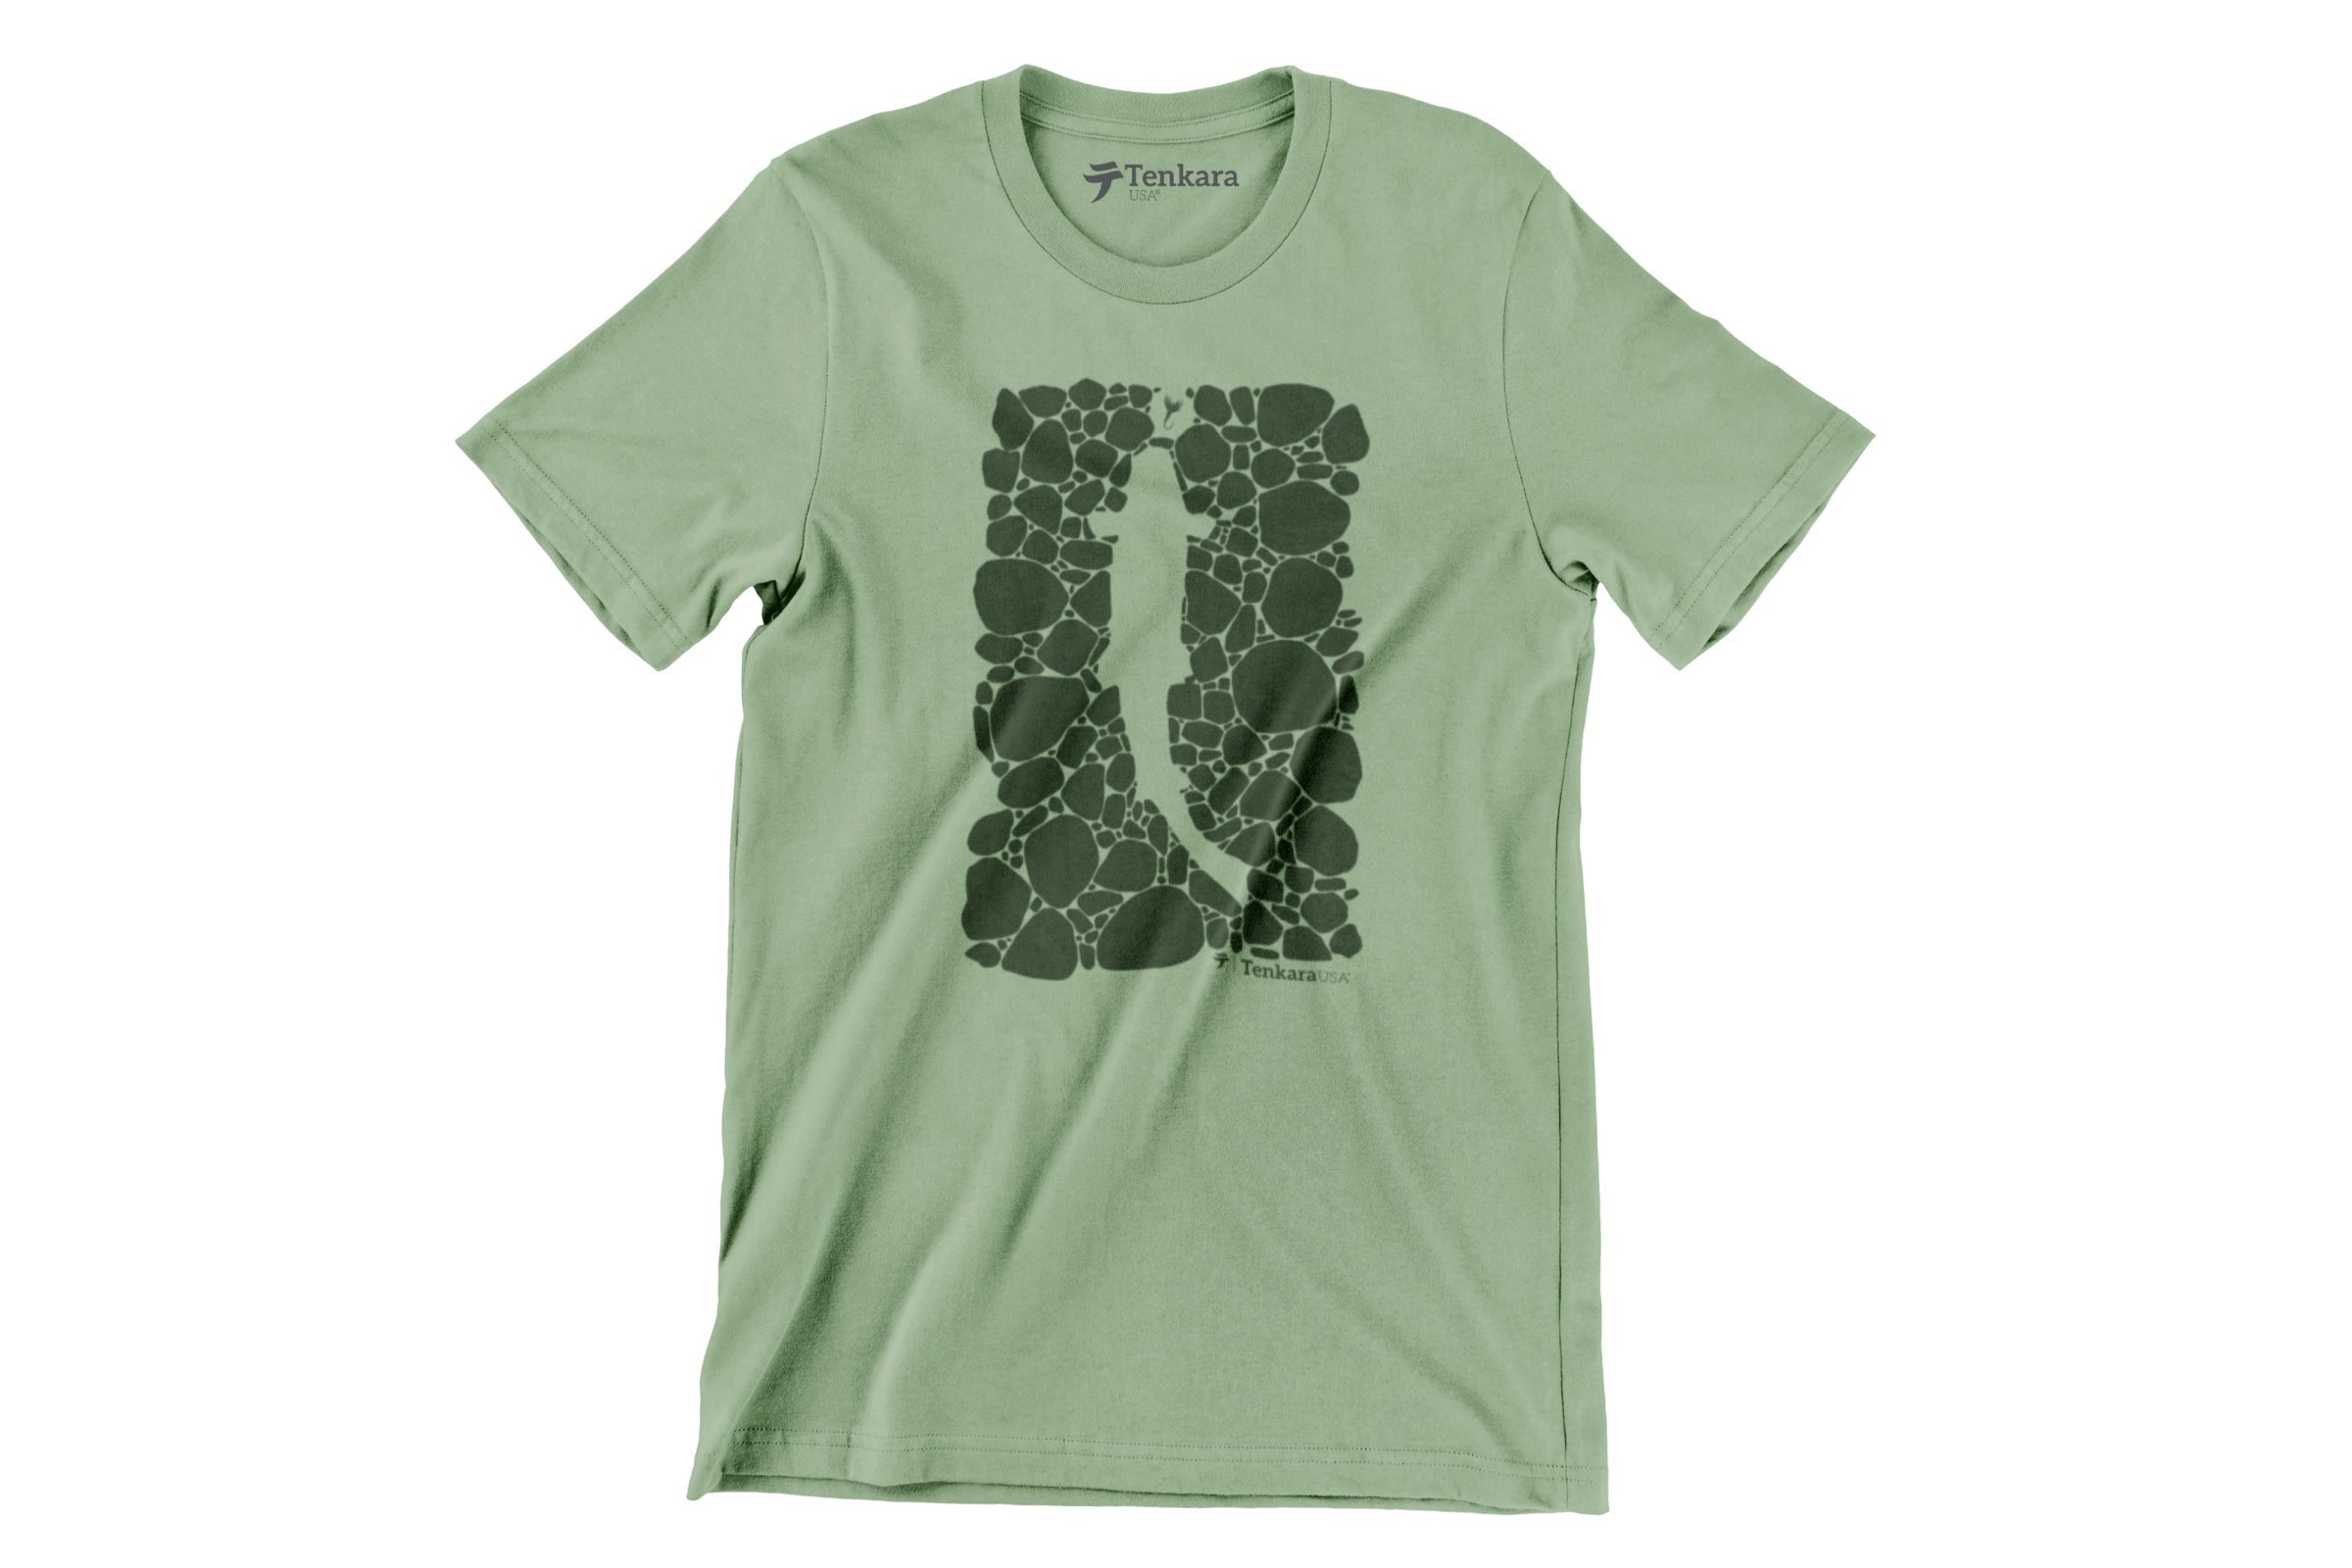 Tenkara USA Rocks T-Shirt.